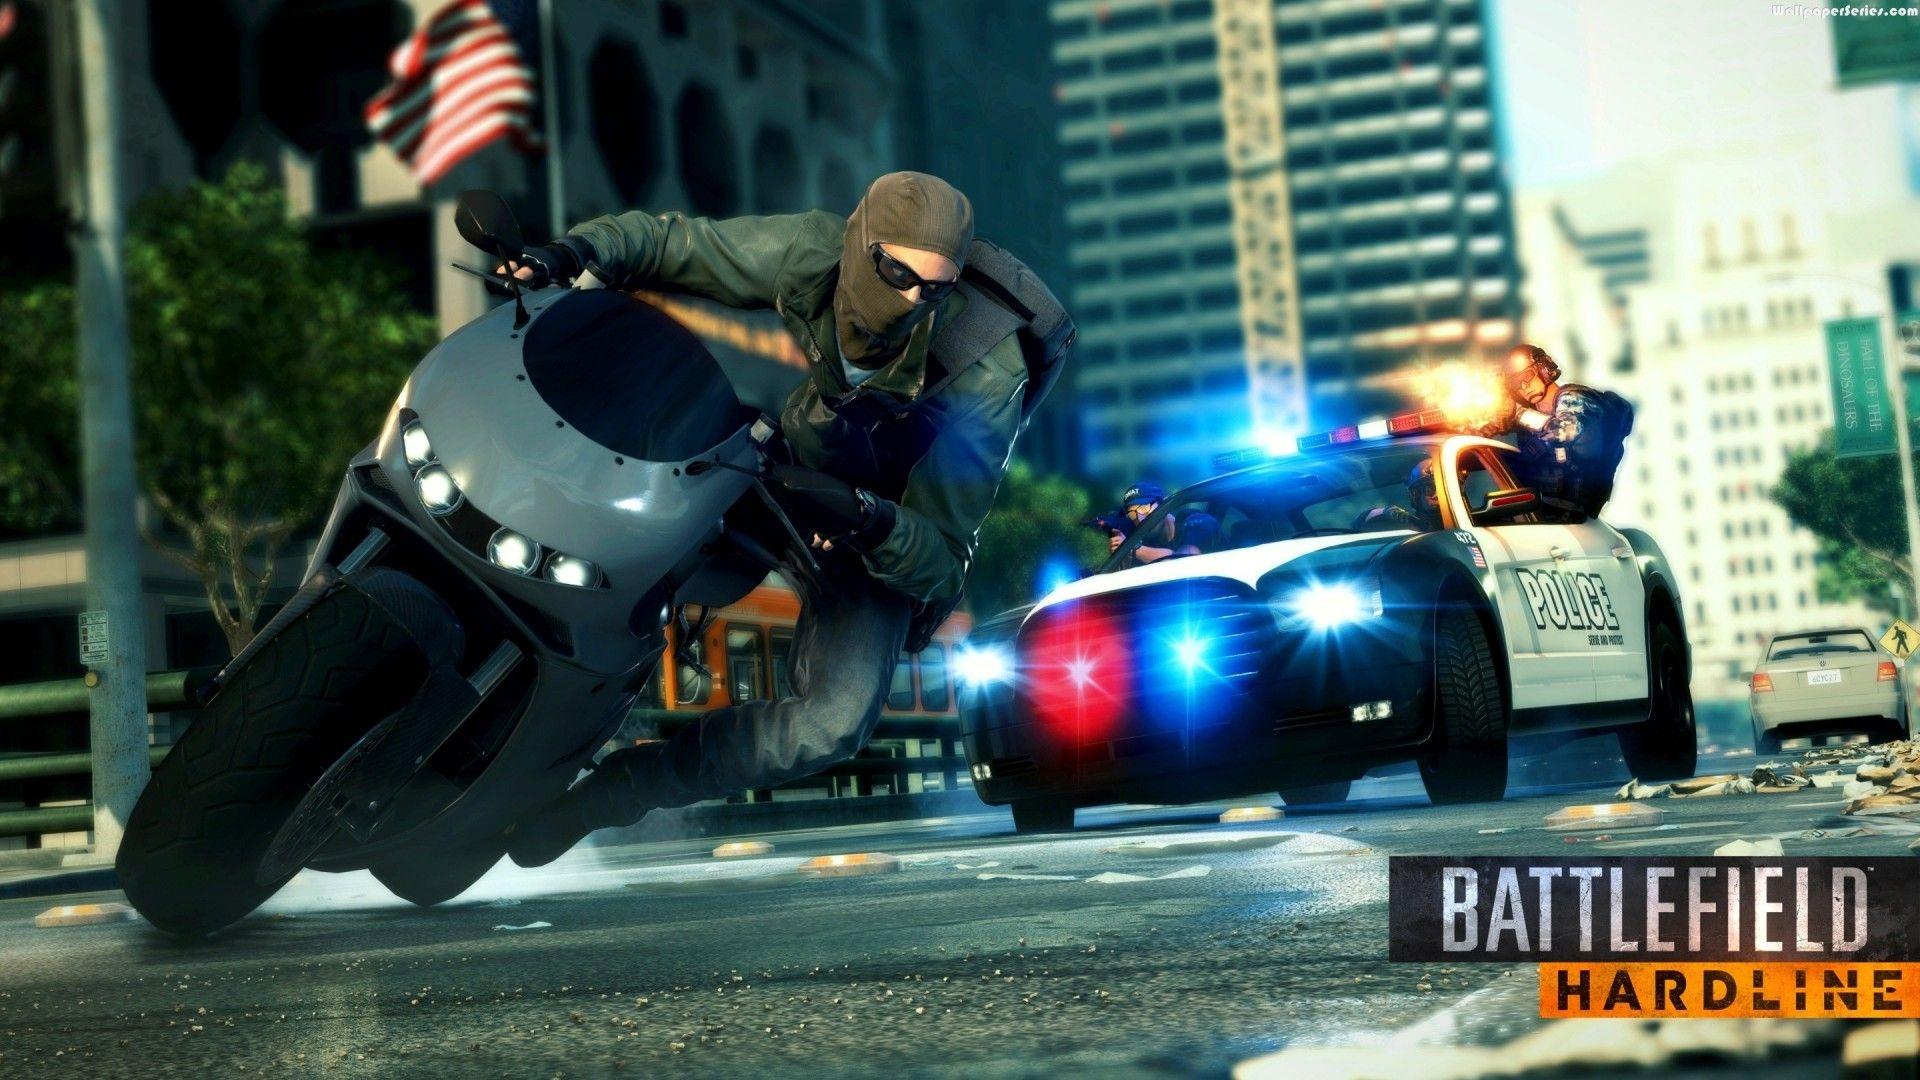 Battlefield HardLine Game Police Car HD Wallpaper